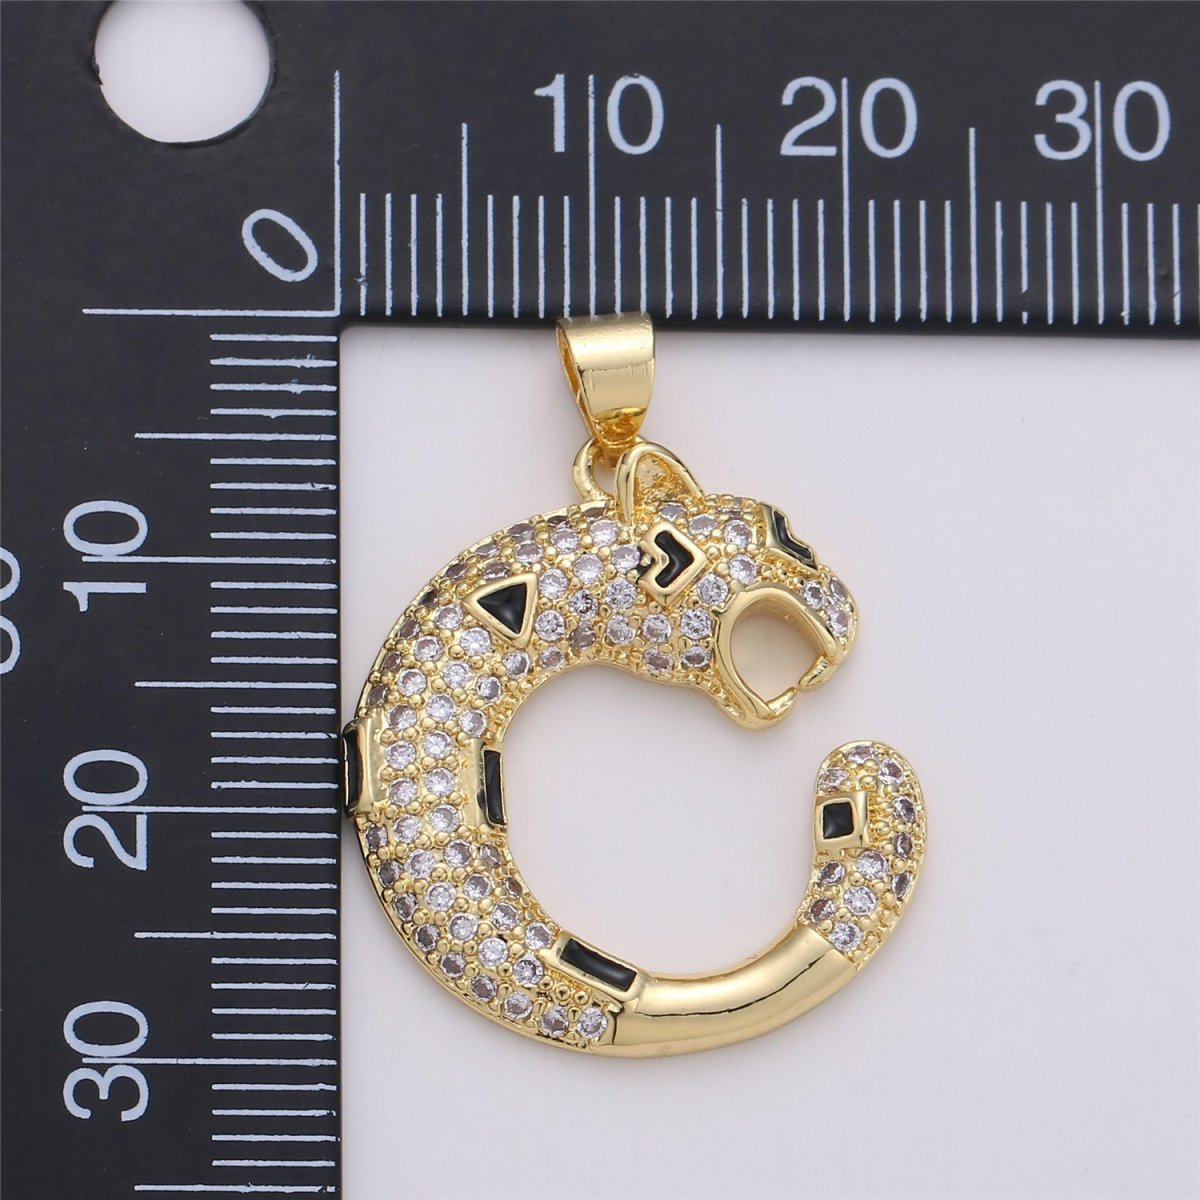 14k Gold Filled Ouroboros Pendant, Snake Pendant, Ouroboros Charm, Snake Charm, Micro Pave Ouroboros Jewelry, Snake Jewelry, Serpent Charm I-616 - DLUXCA